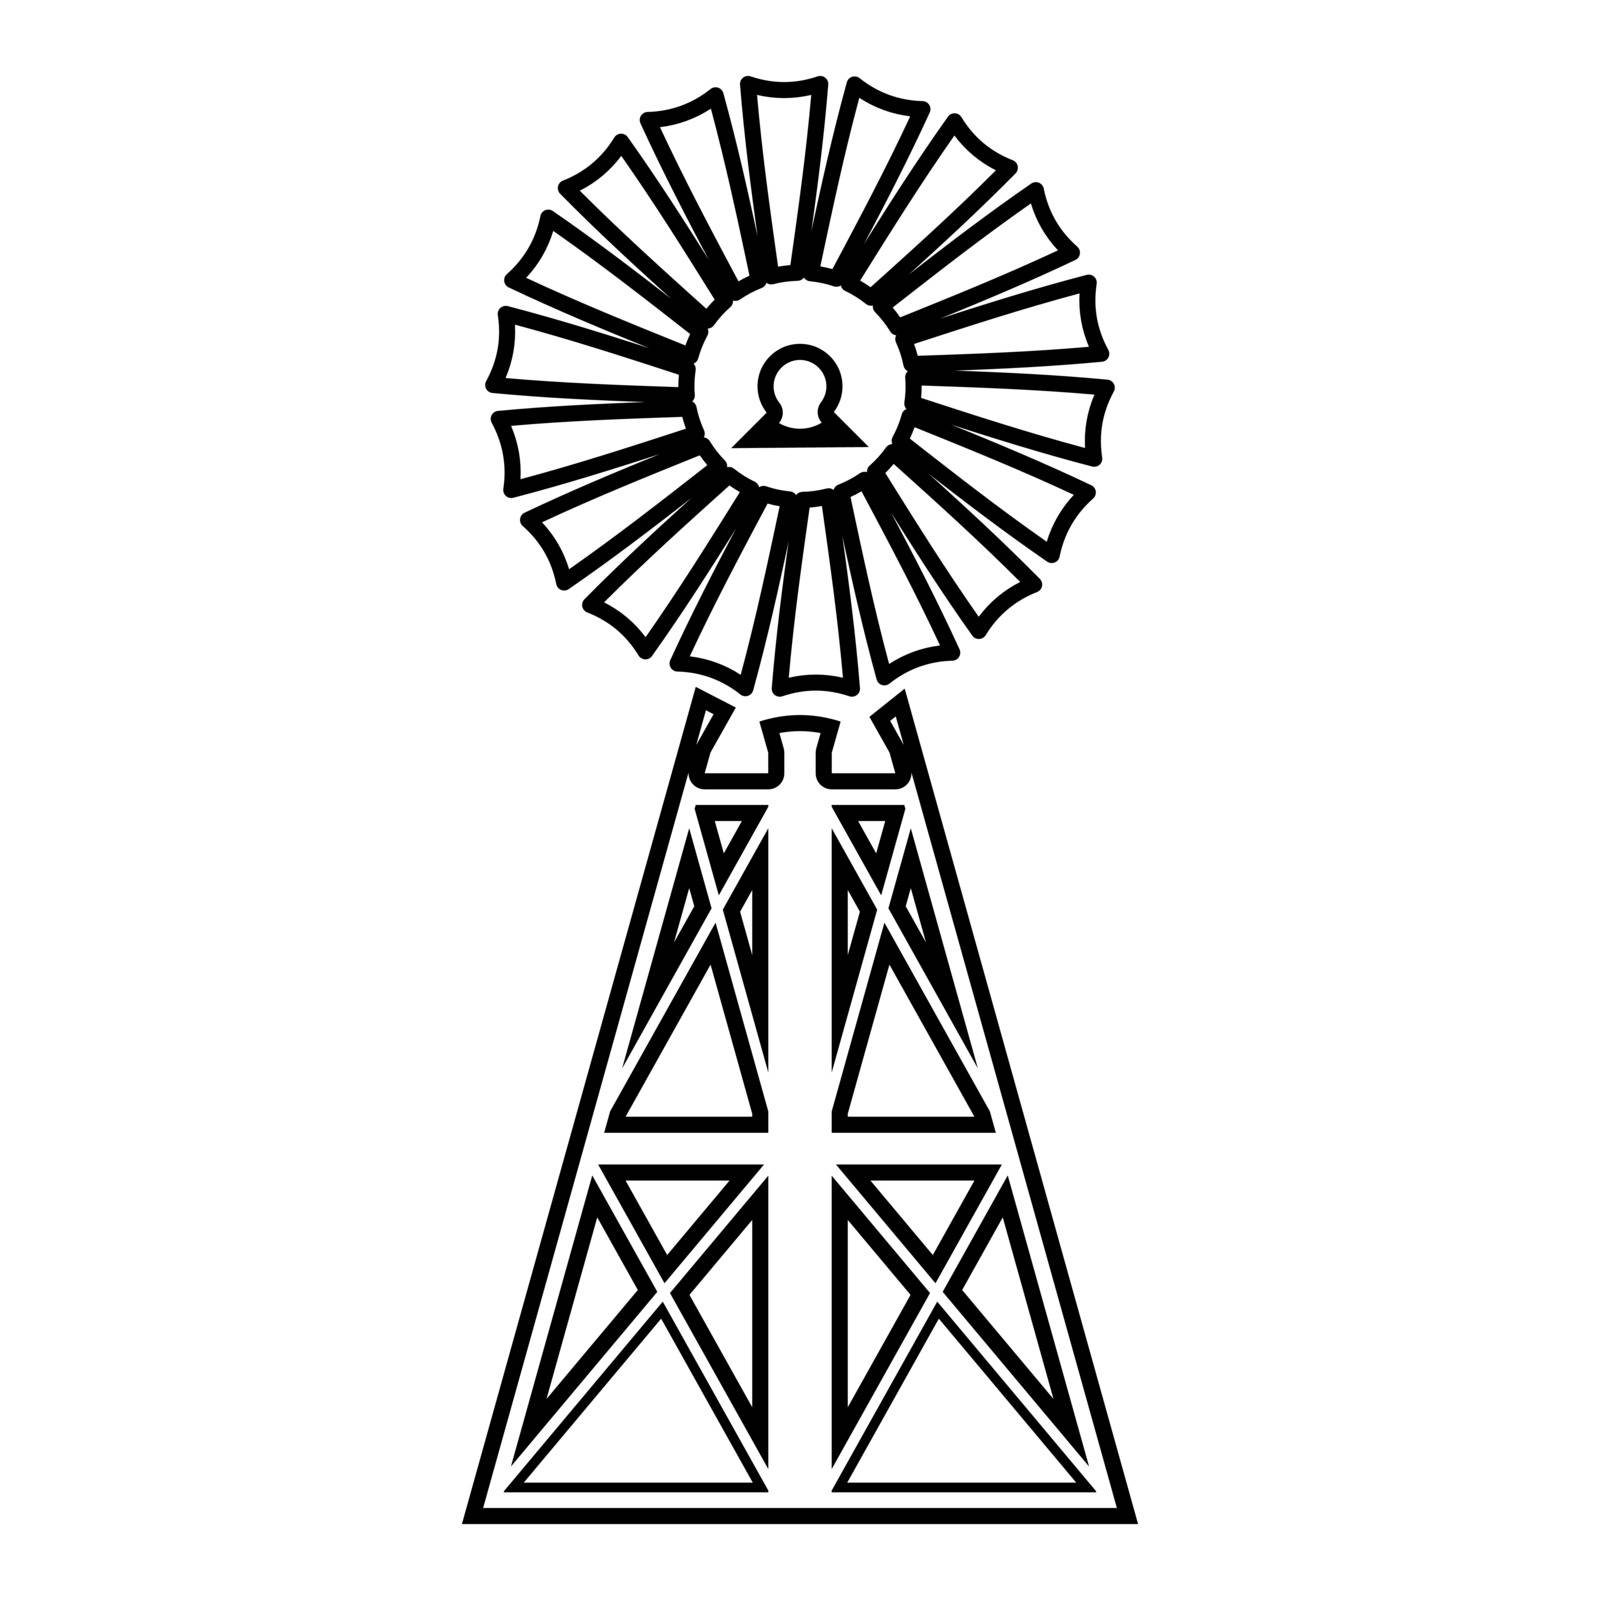 Wind turbine windmill classic american icon black by serhii435